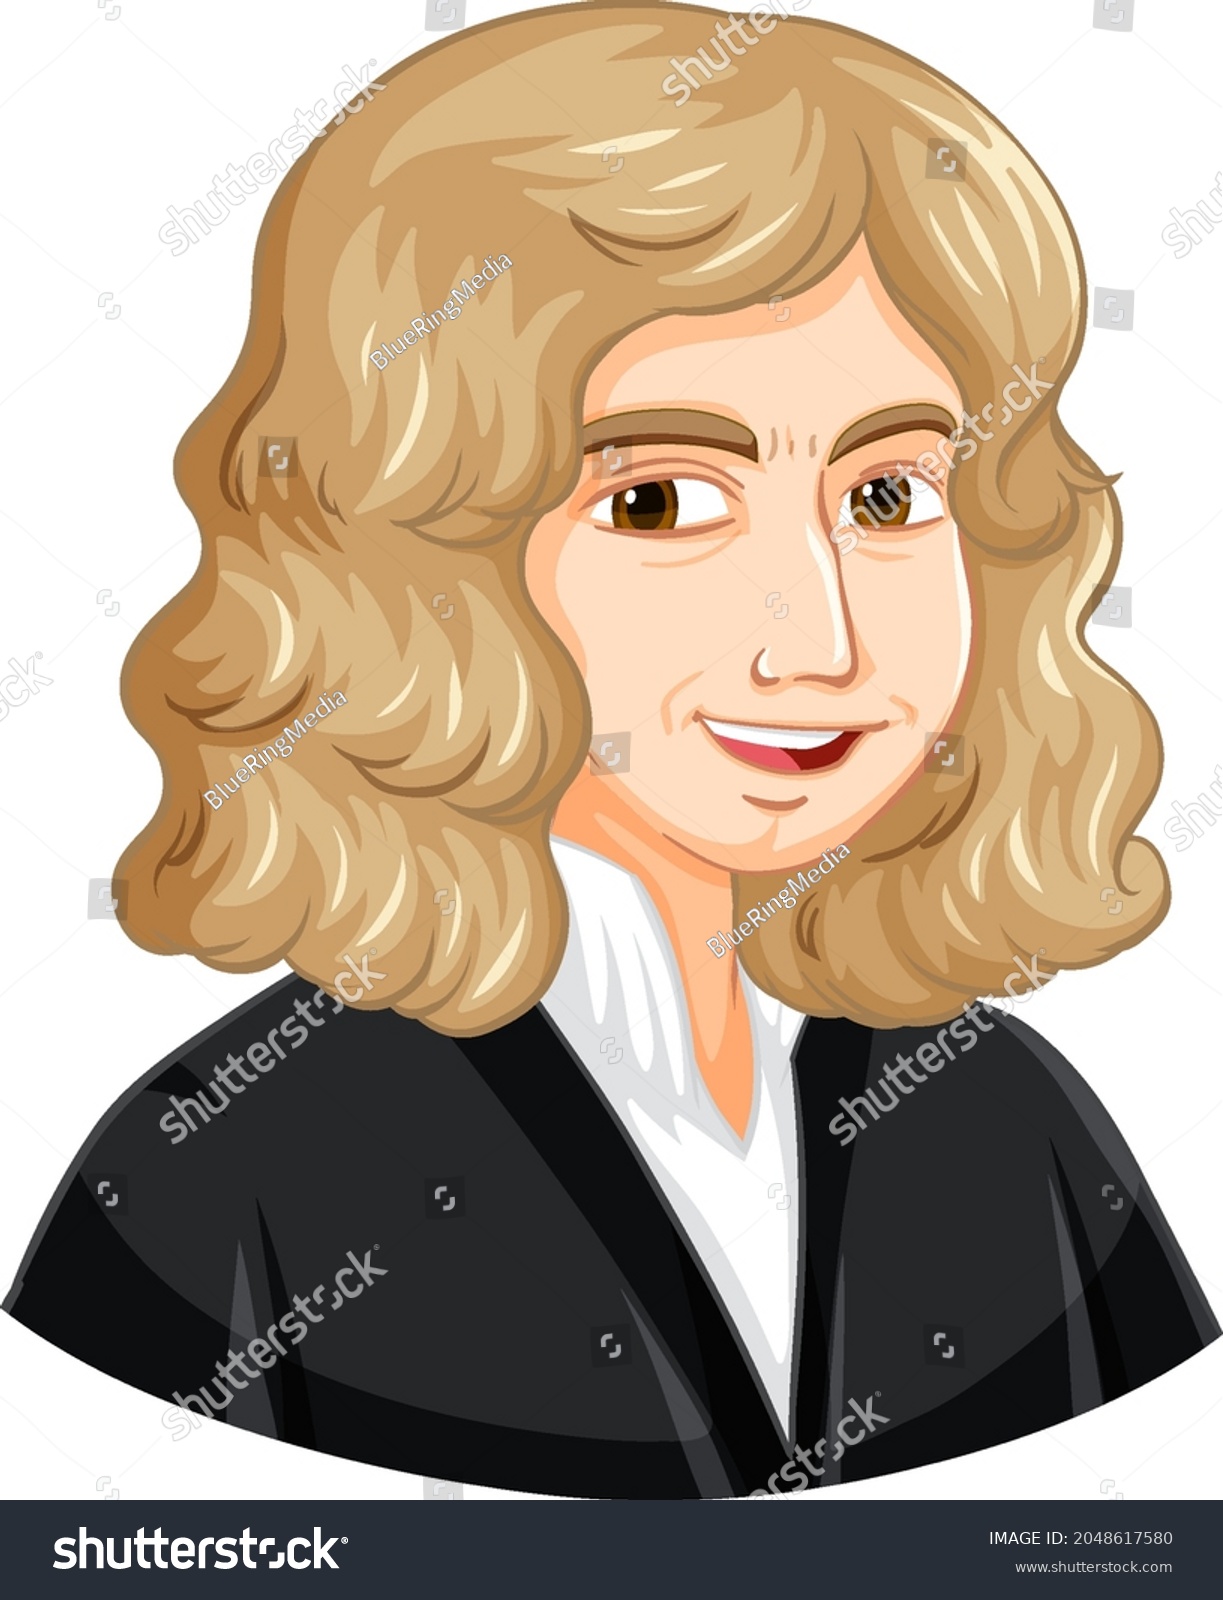 Retrato De Isaac Newton En Ilustración Vector De Stock Libre De Regalías 2048617580 9709